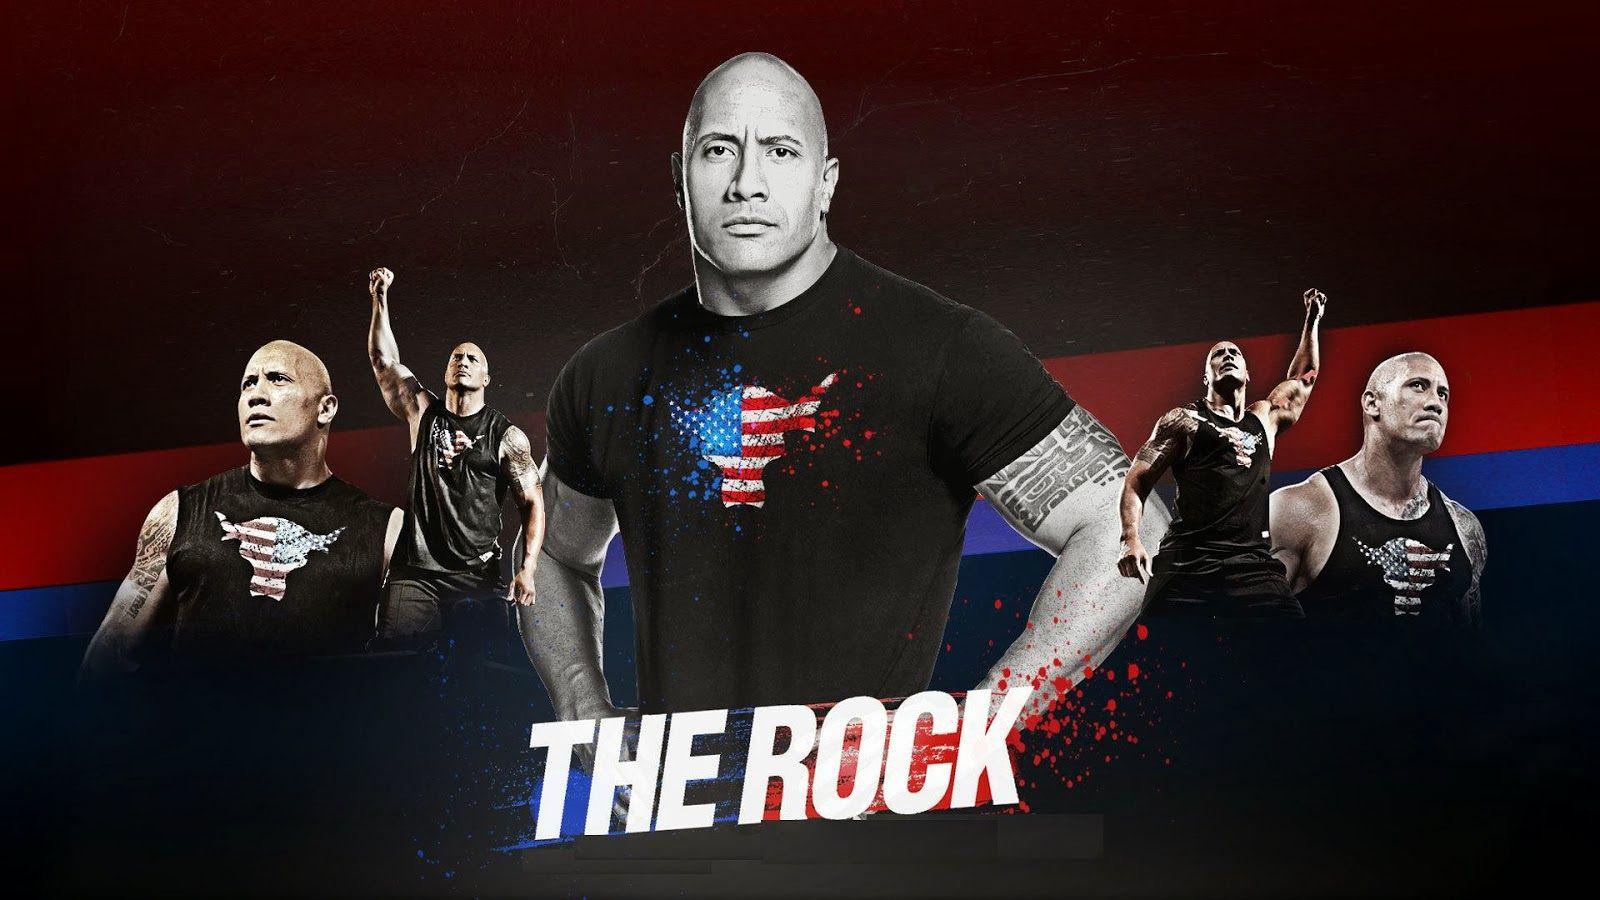 The Rock HD Wallpaper Free Download. WWE HD WALLPAPER FREE DOWNLOAD